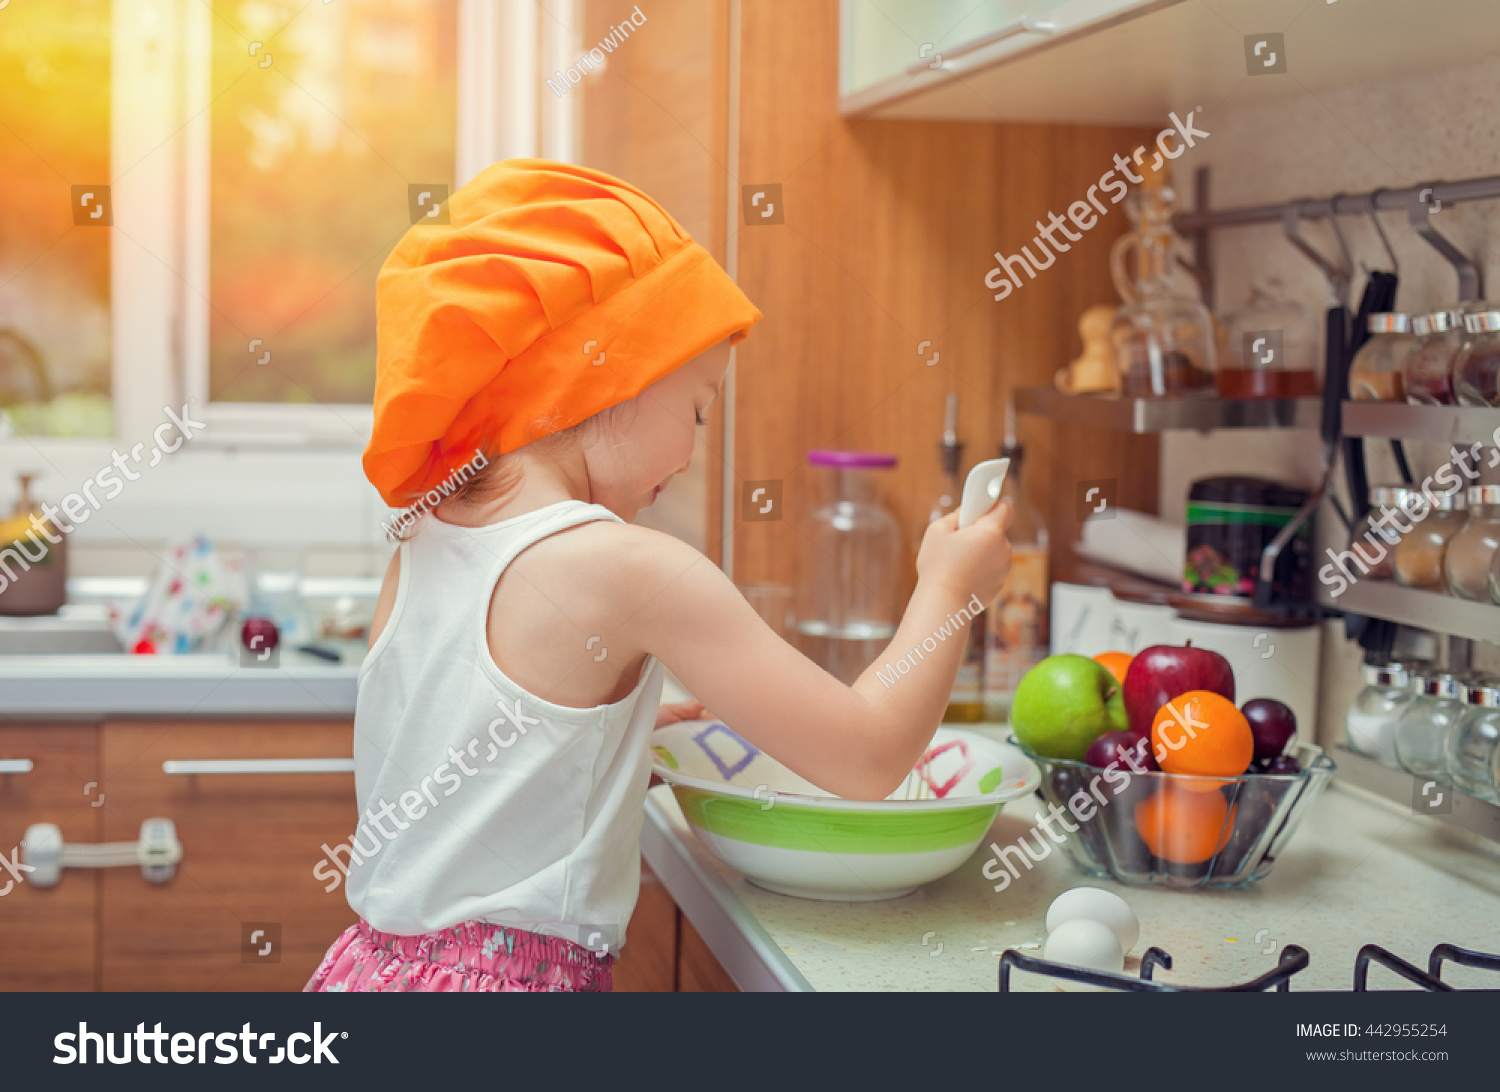 beautiful cute little girl with bonnet making pasta dough in kitchen #442955254